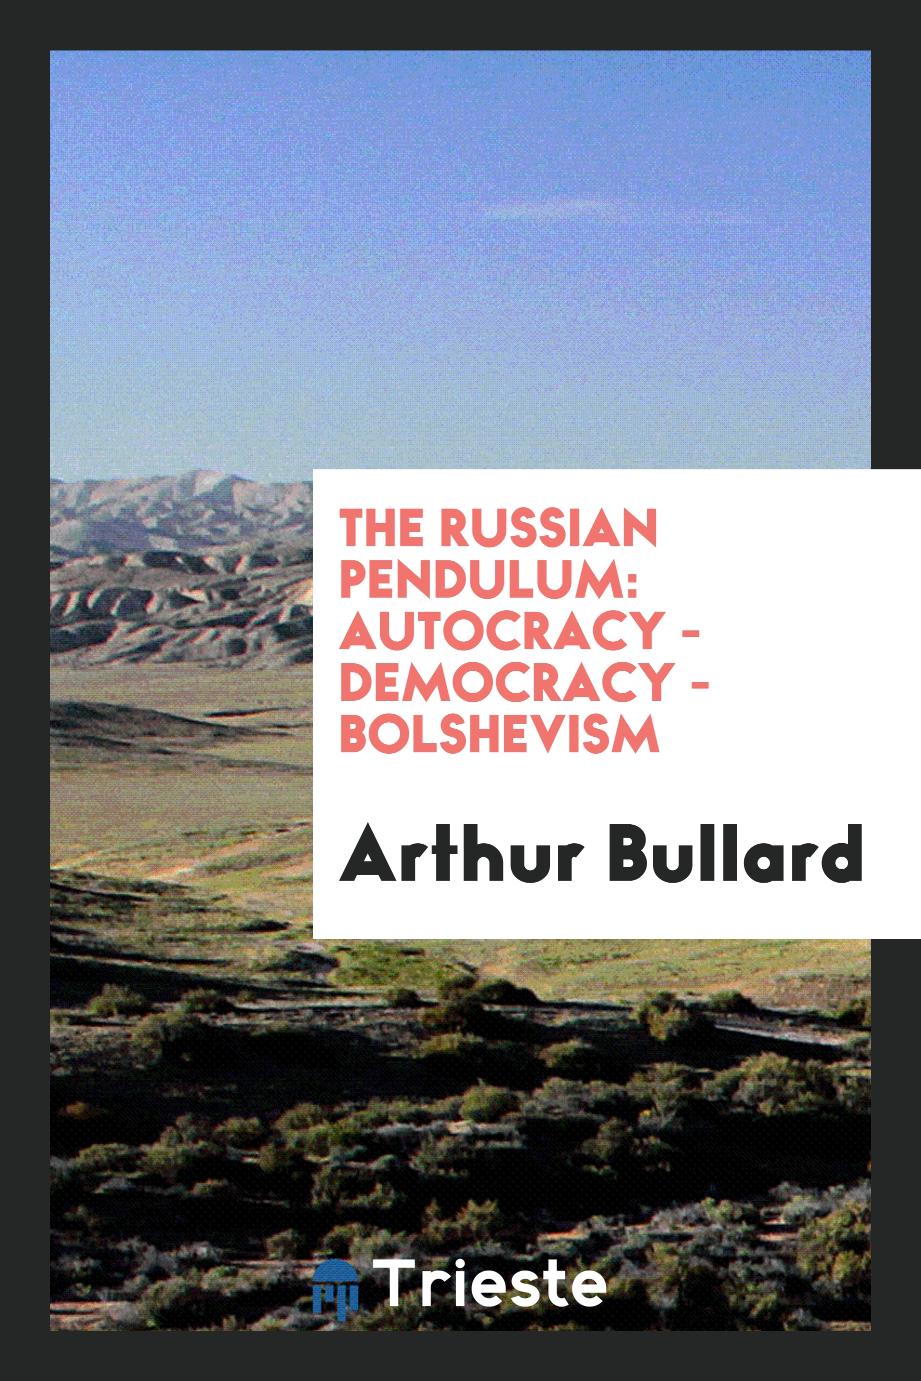 The Russian pendulum: autocracy - democracy - bolshevism